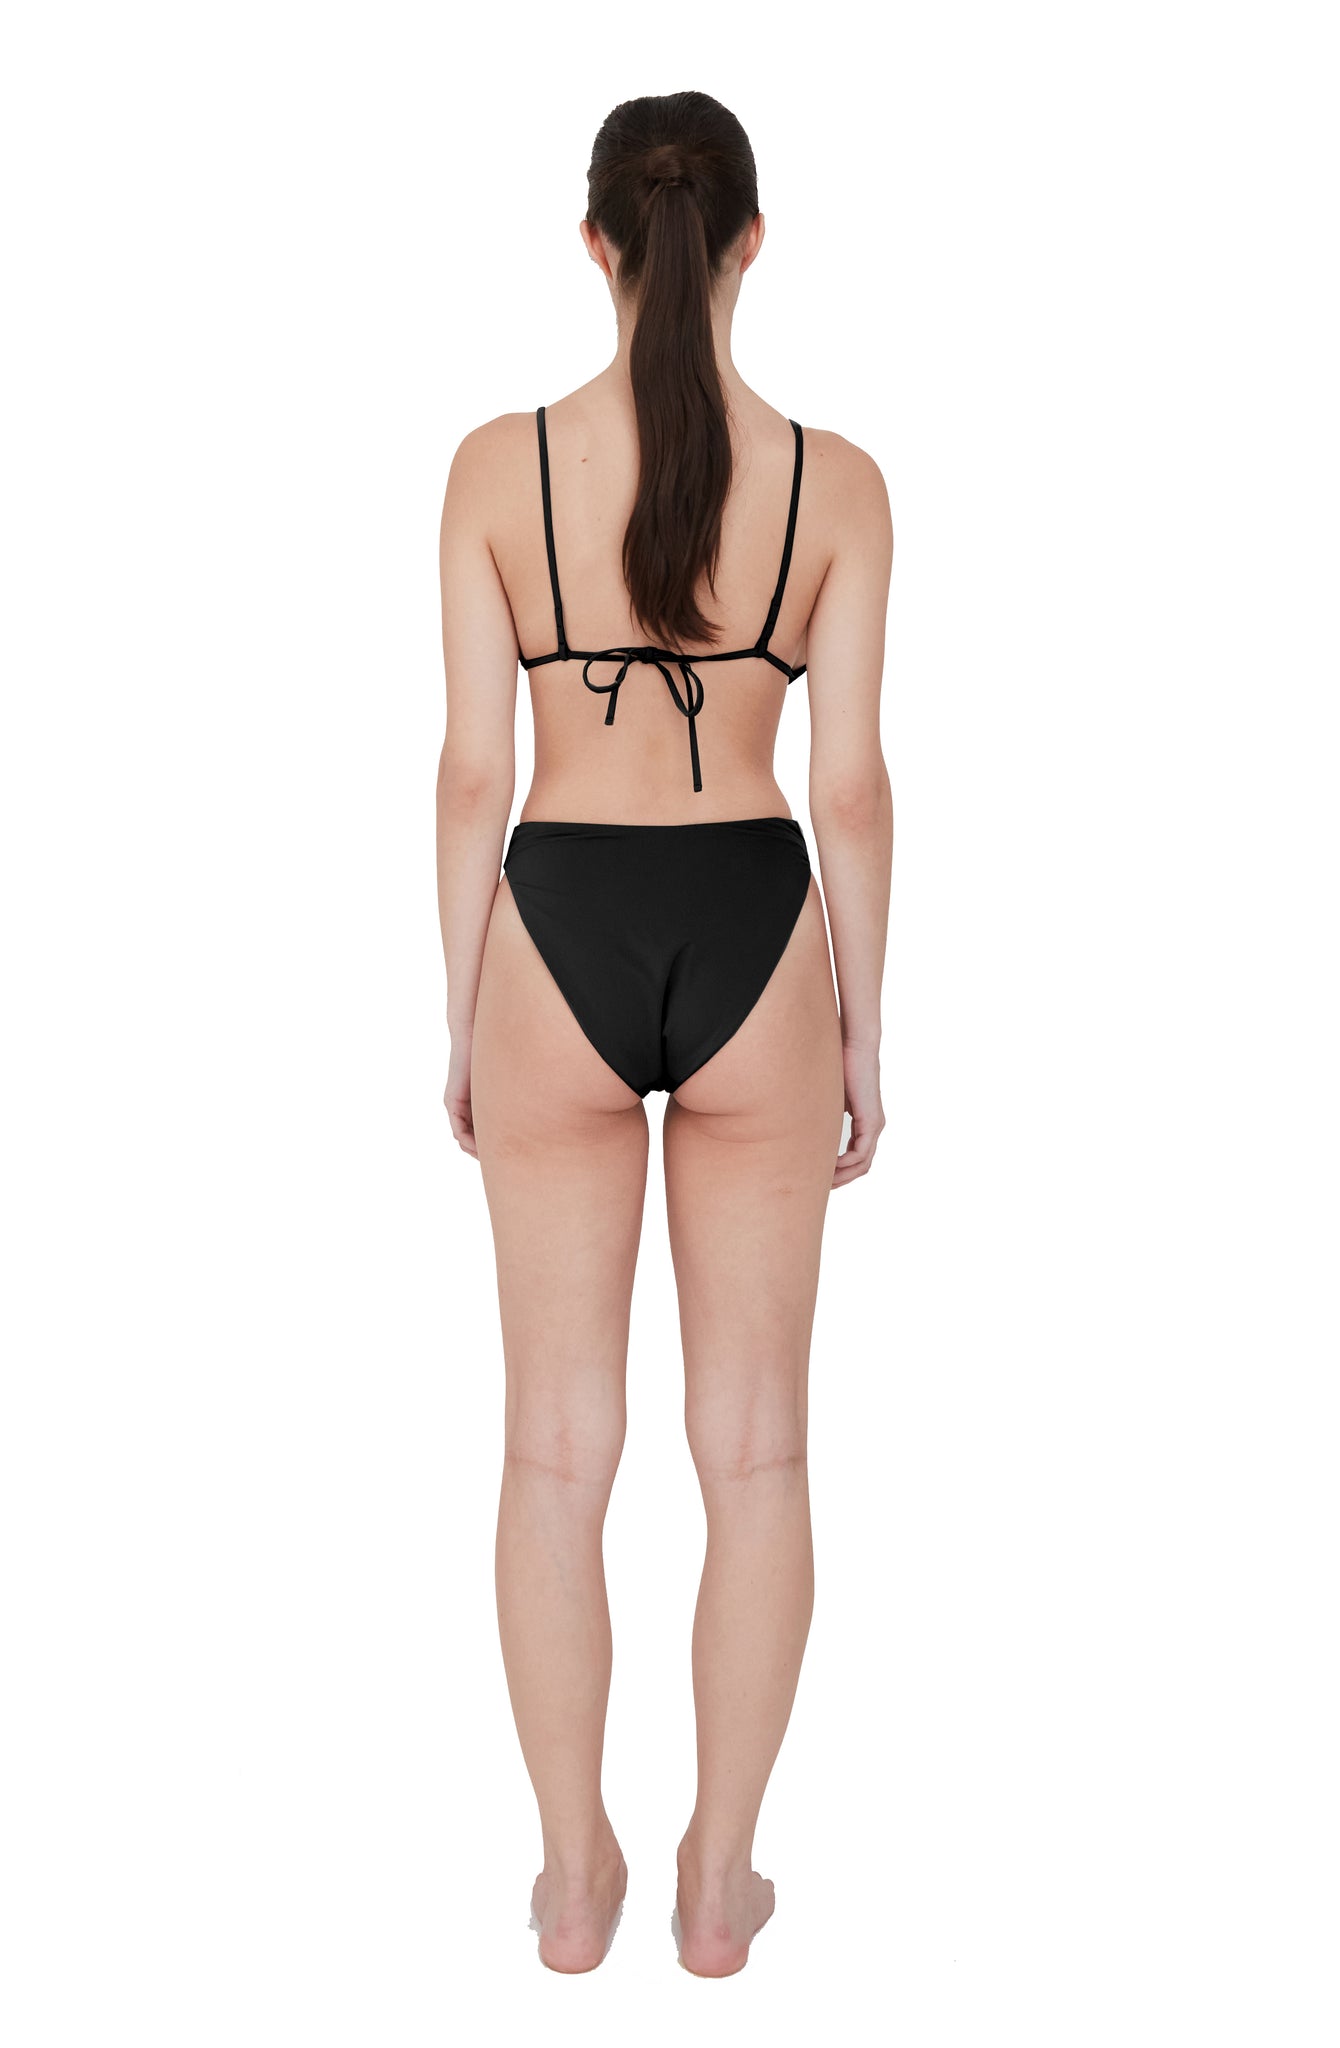 XUNZOO Women's Sheer Mesh Bralette Triangle Bikini Top Breathable